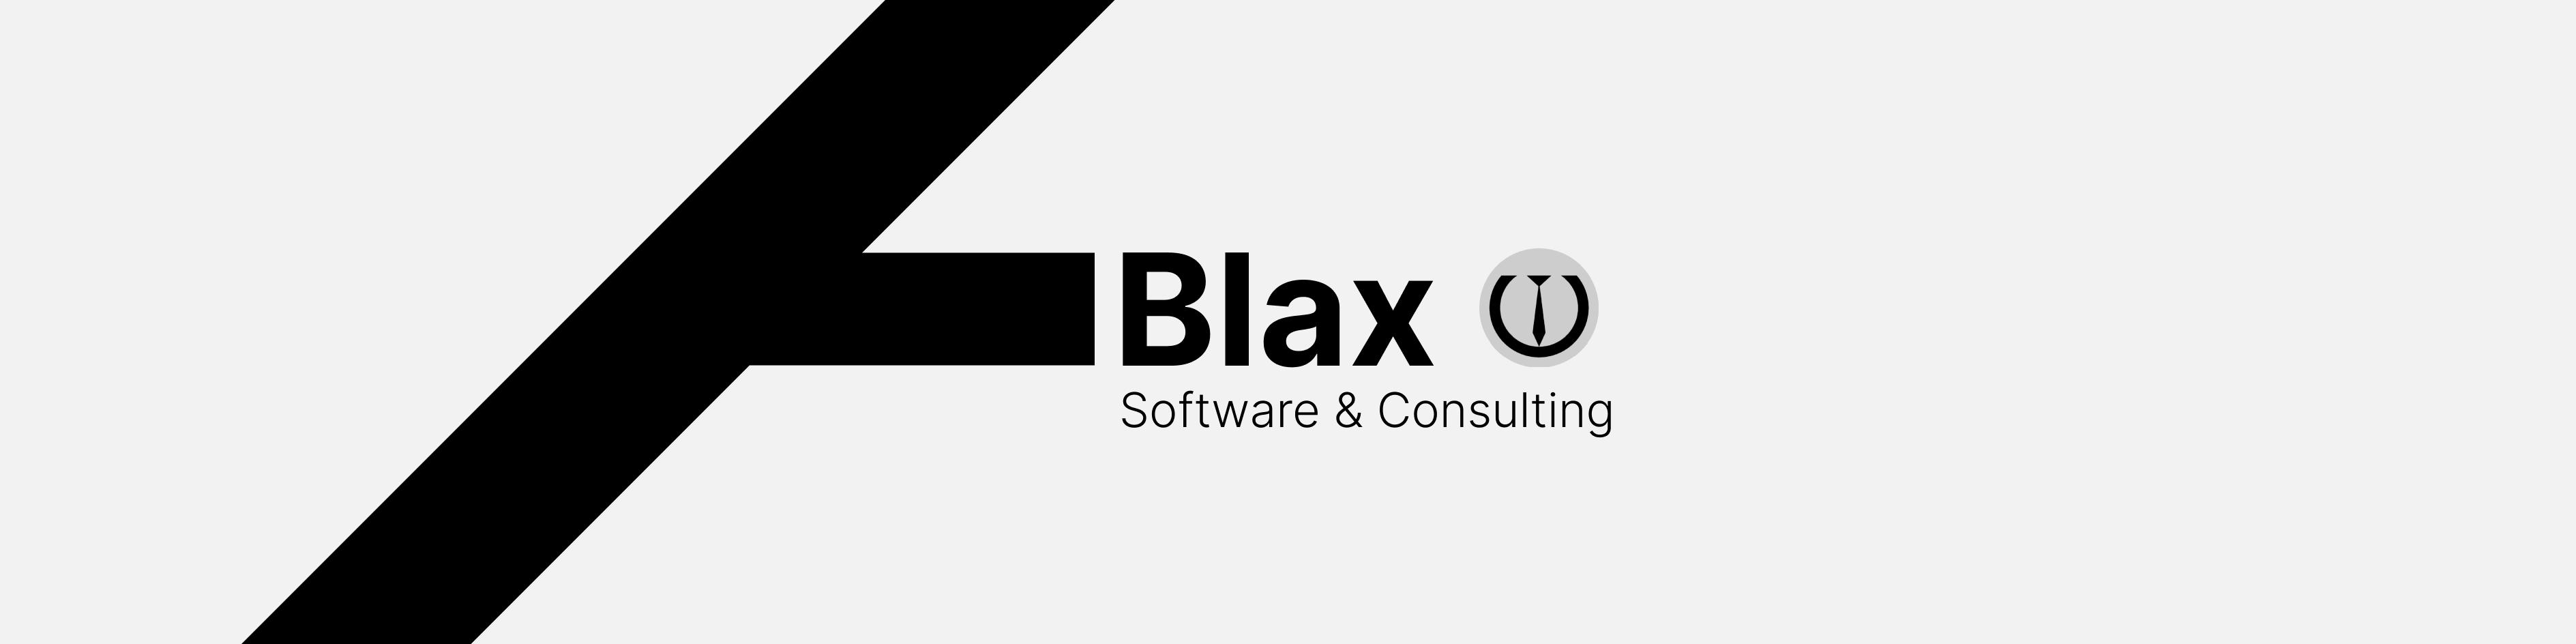 blax company banner